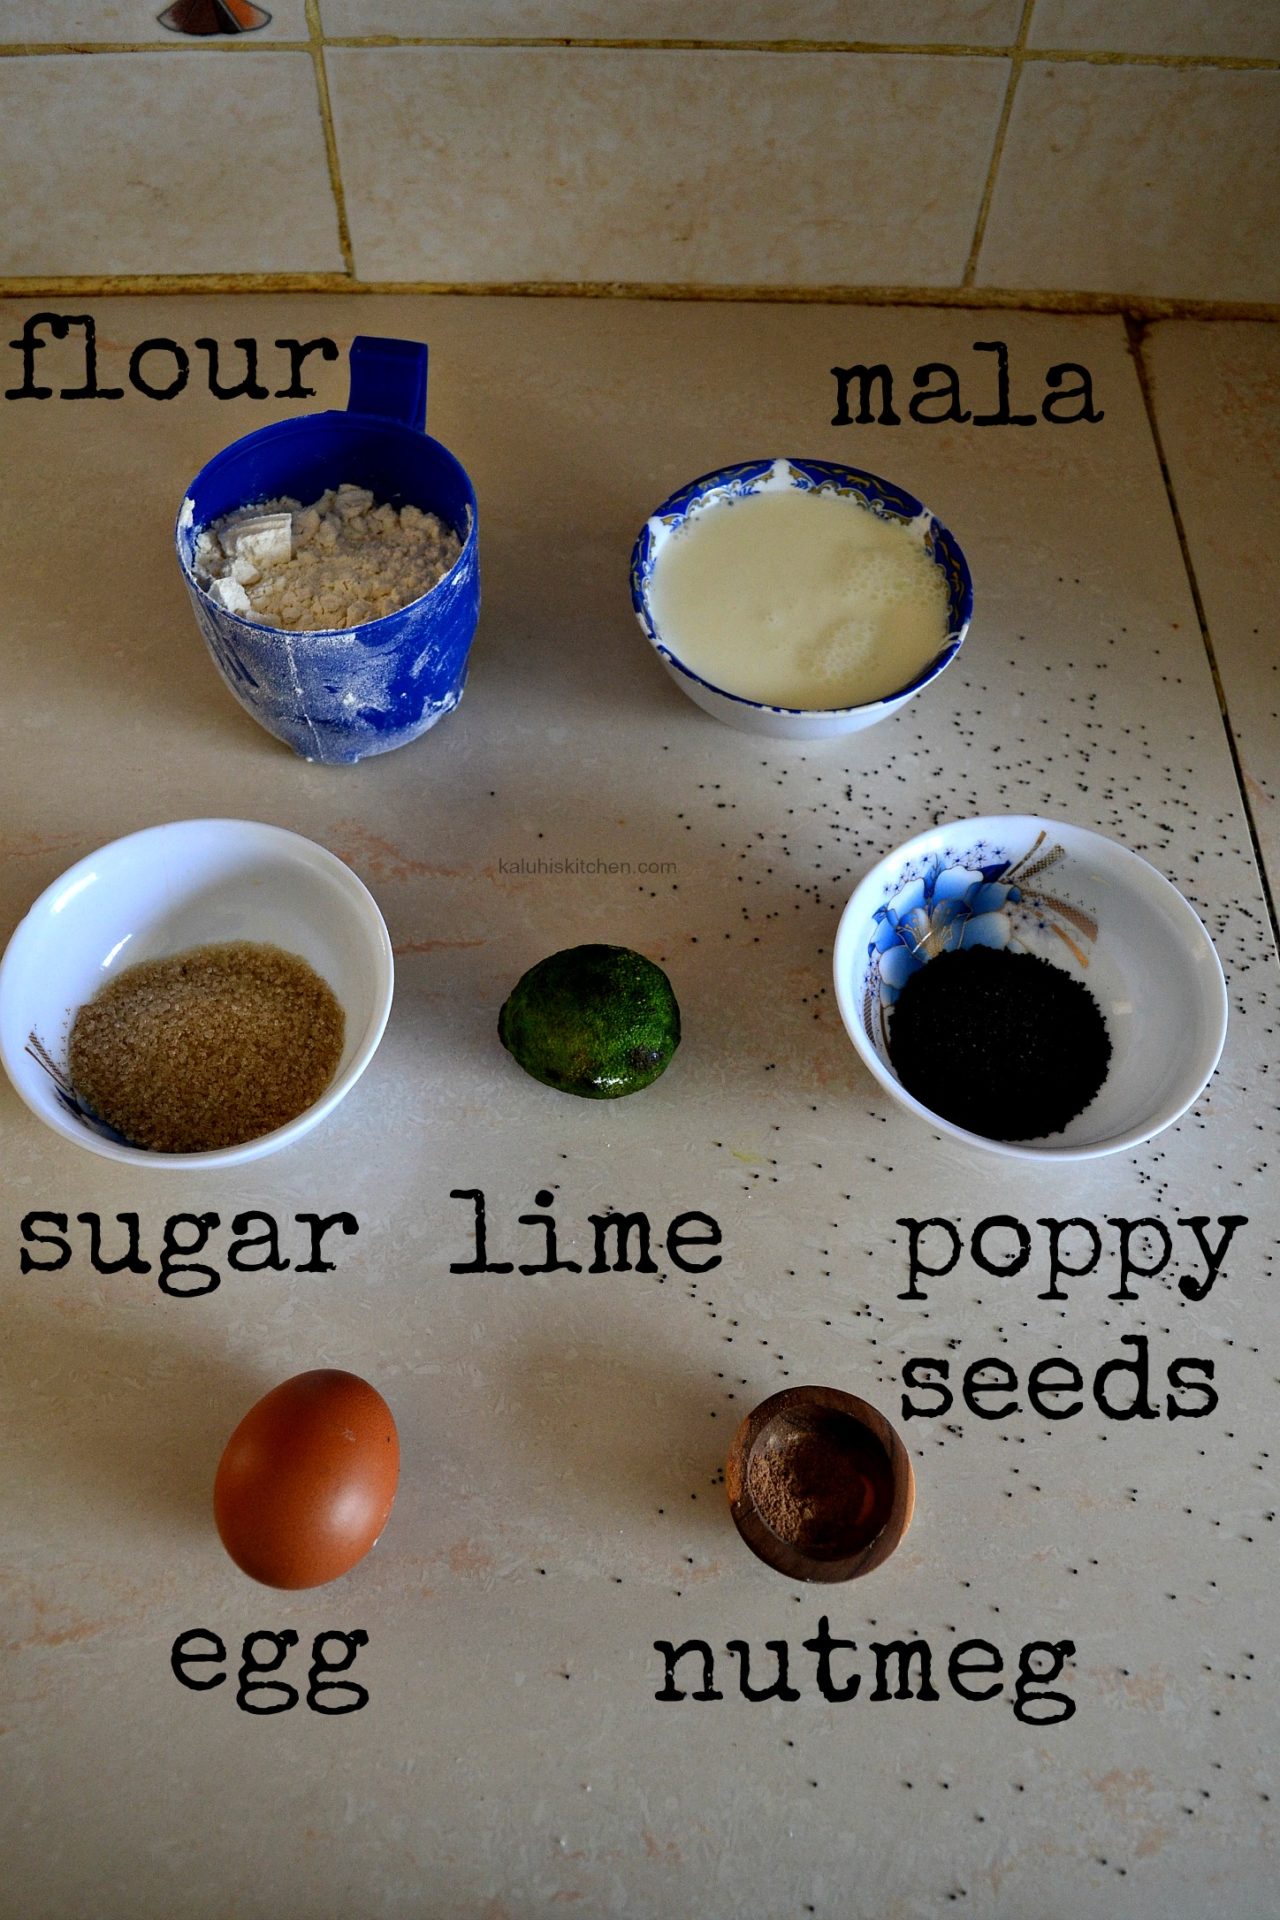 how to make drop scones_drop scones ingredients_lime and poppy seed dropscones_best kenyan food blogs_best african food blogs_kaluhiskitchen.com